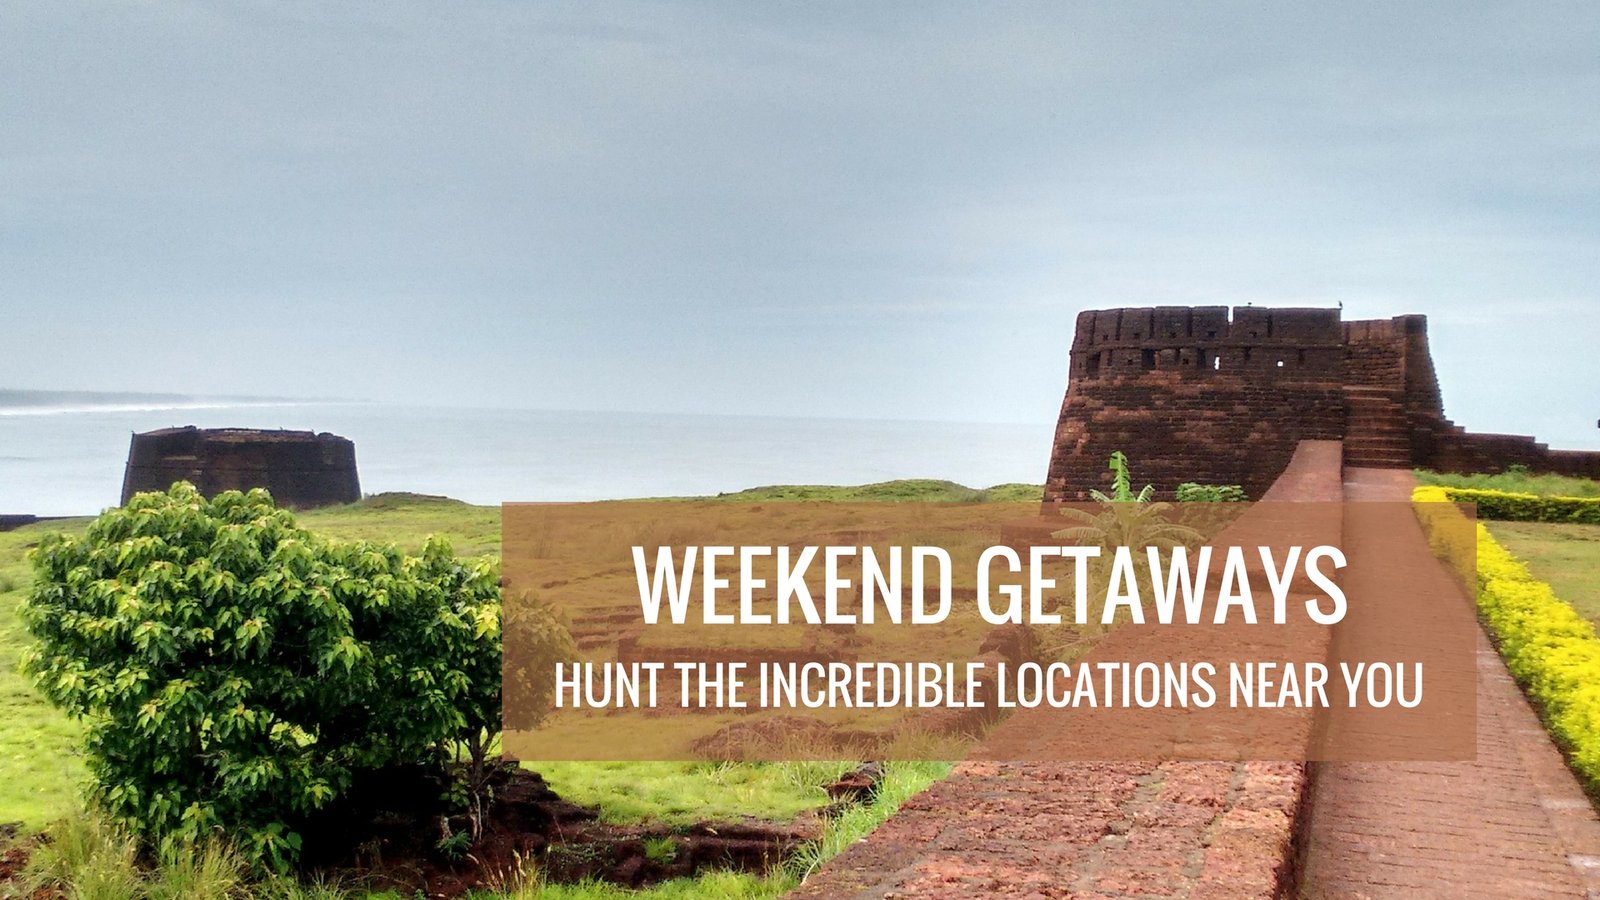 Weekend Gateways in India